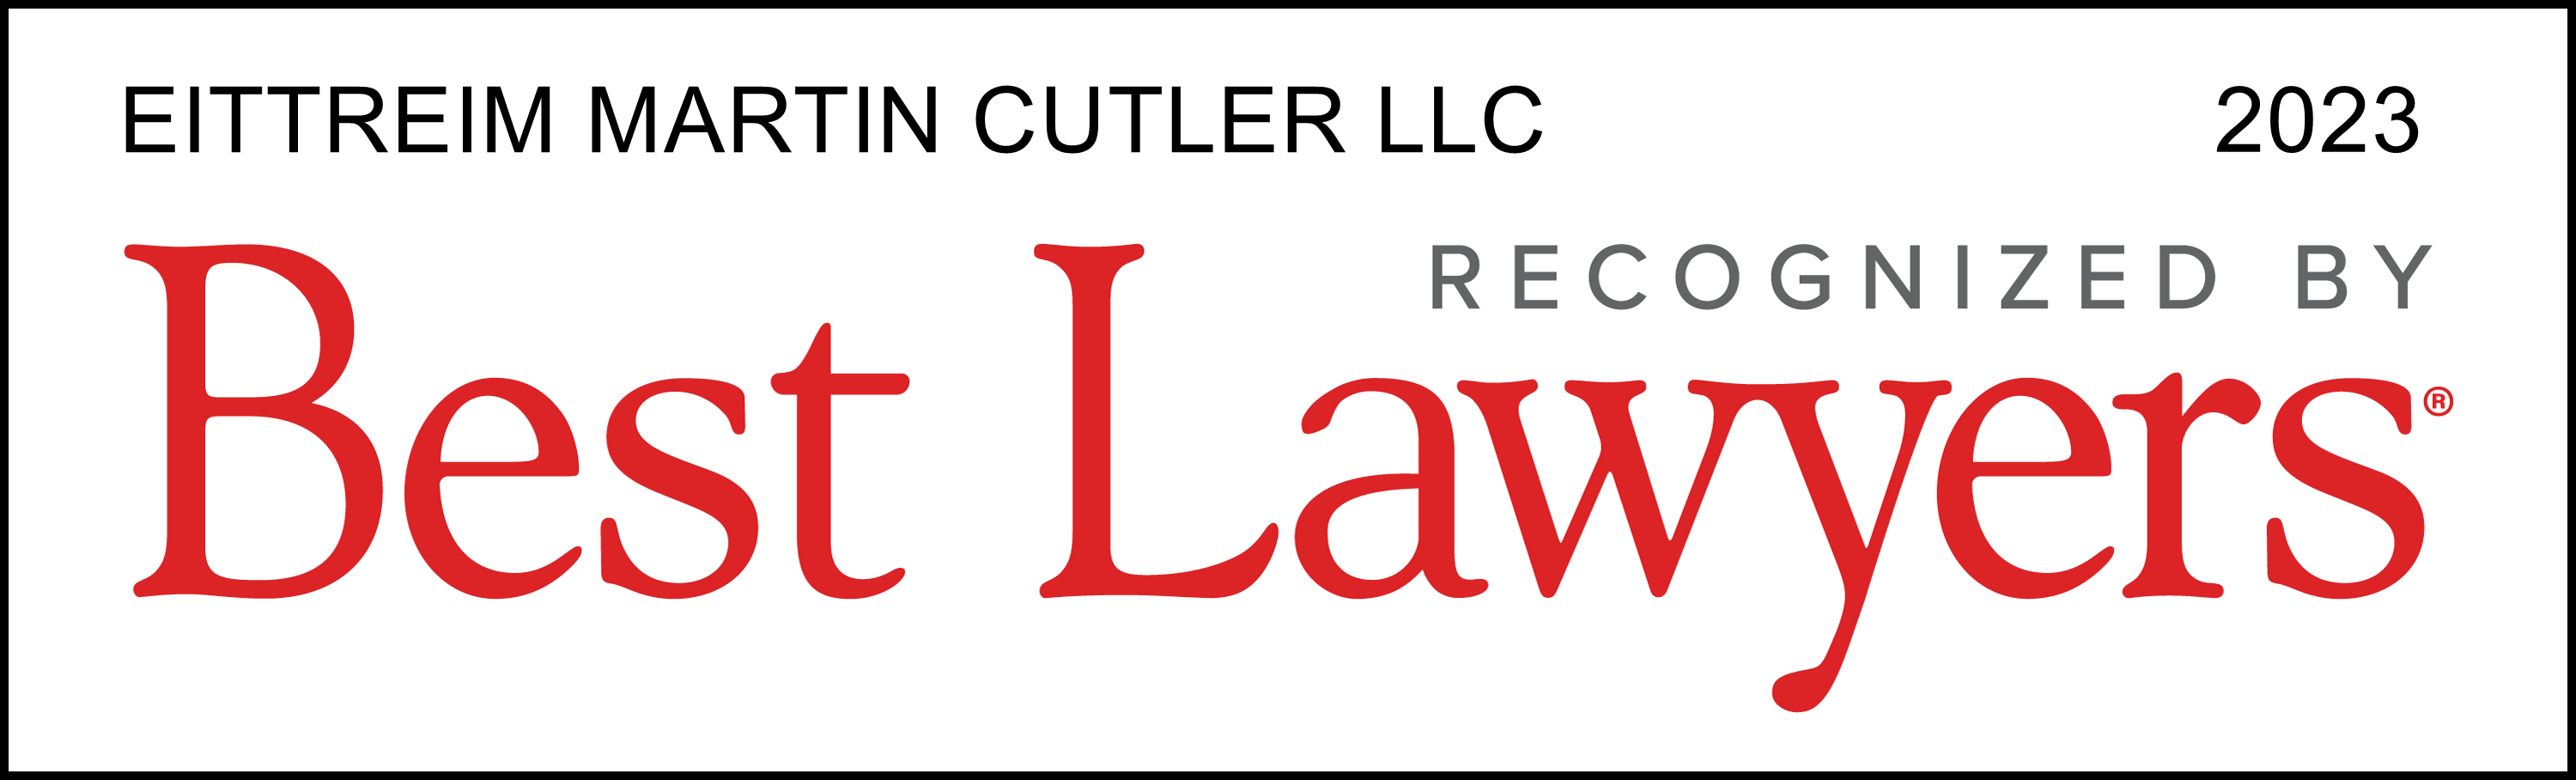 Best Lawyers - Firm Logo 2023